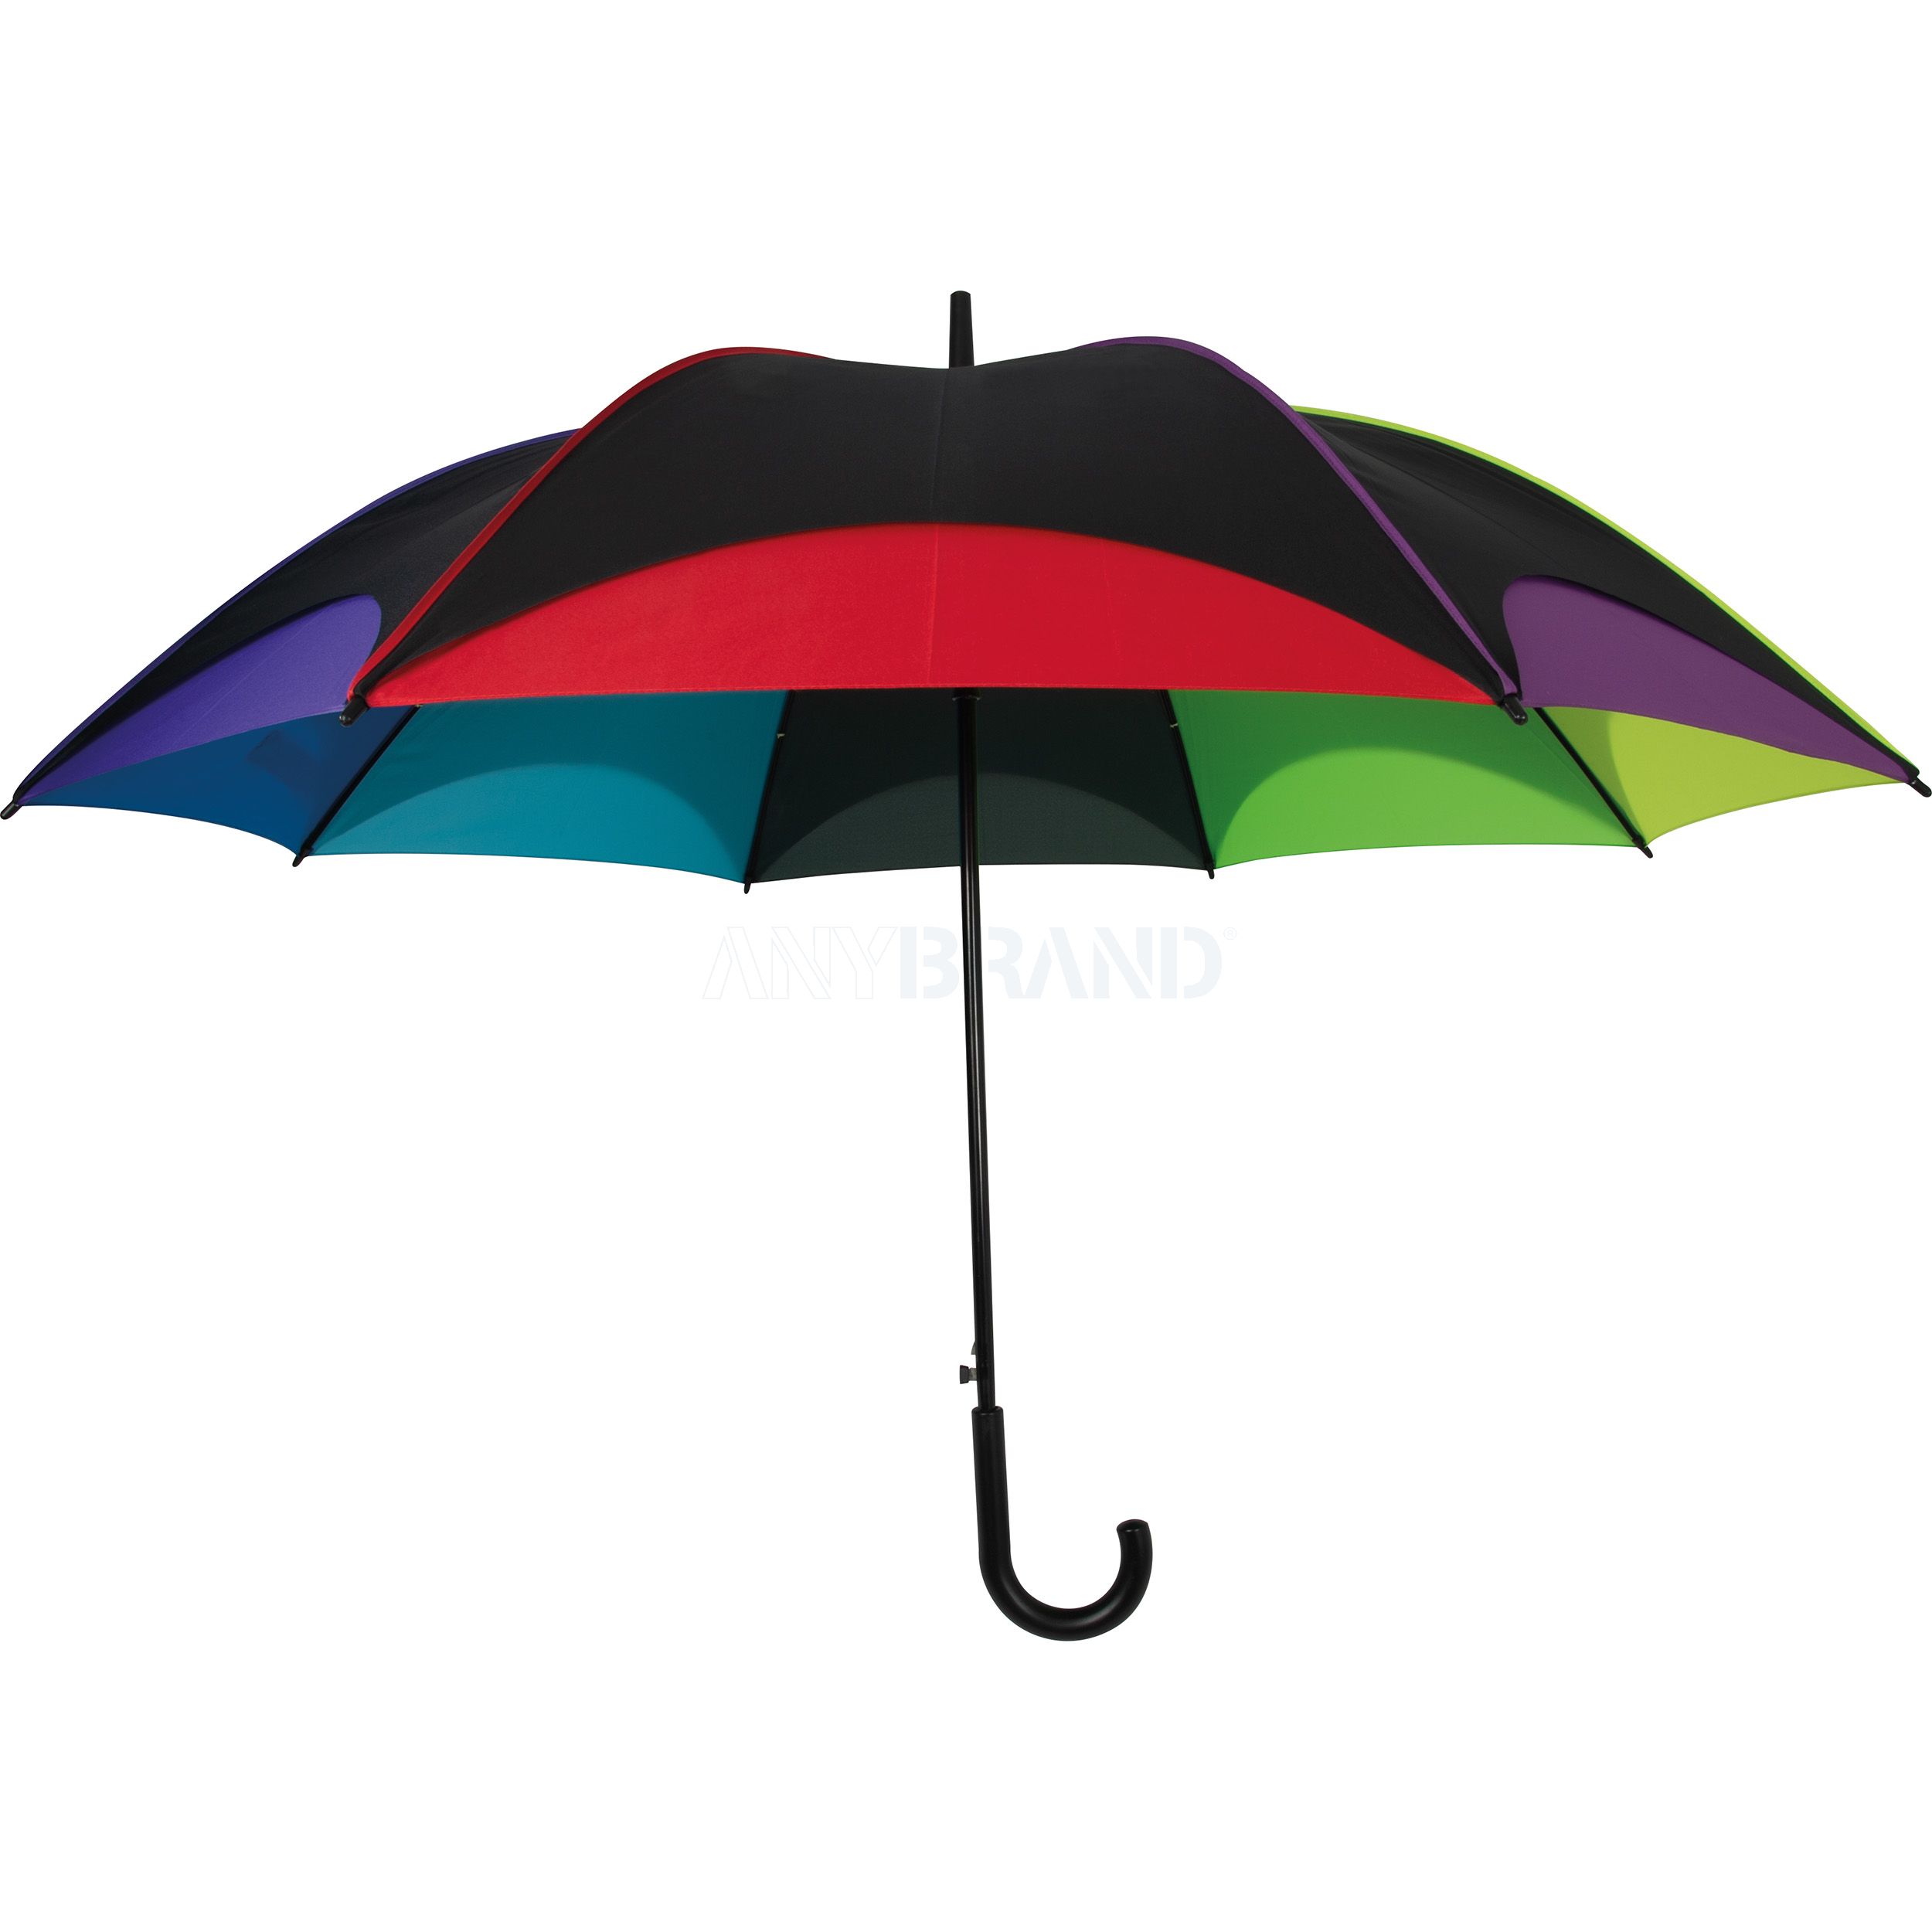 Stockschirme bedrucken ▻ Schirm mit Logo bei ANYBRAND